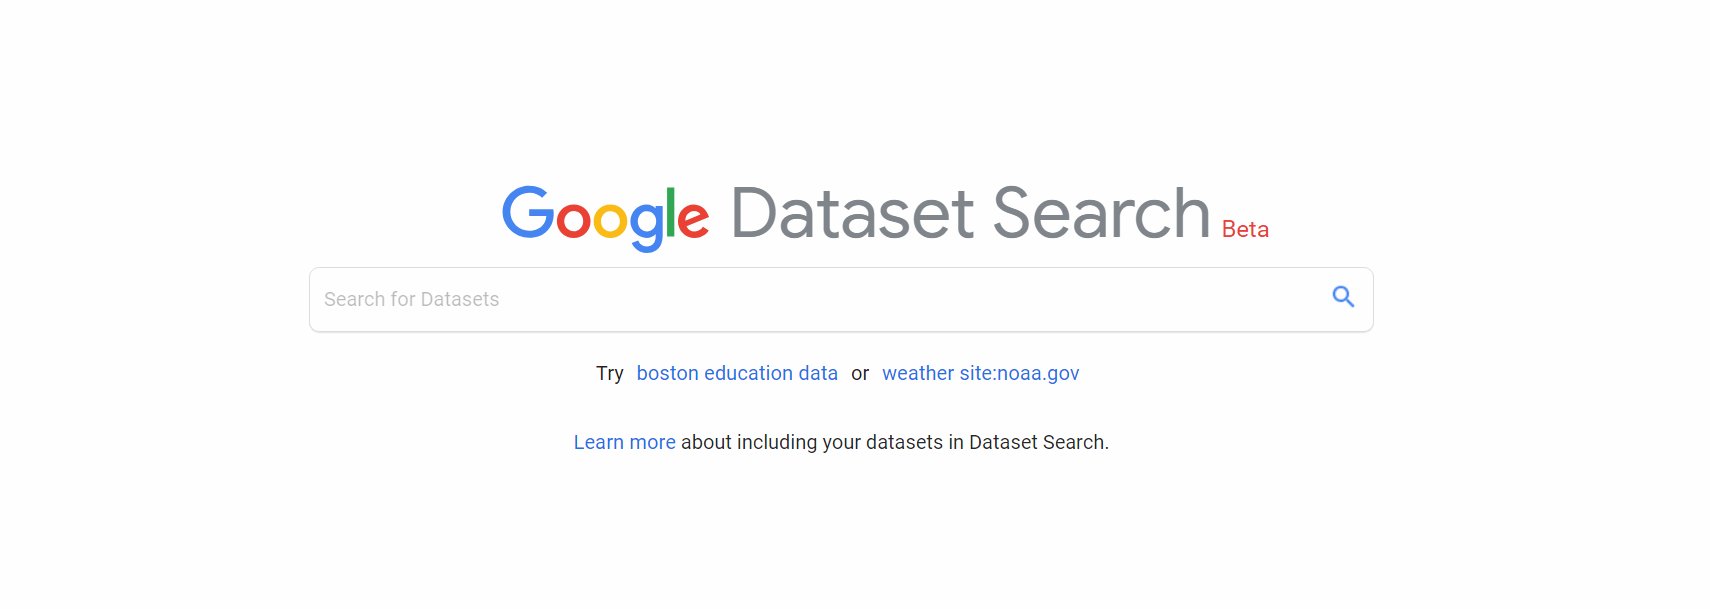 Google Dataset Search tool 